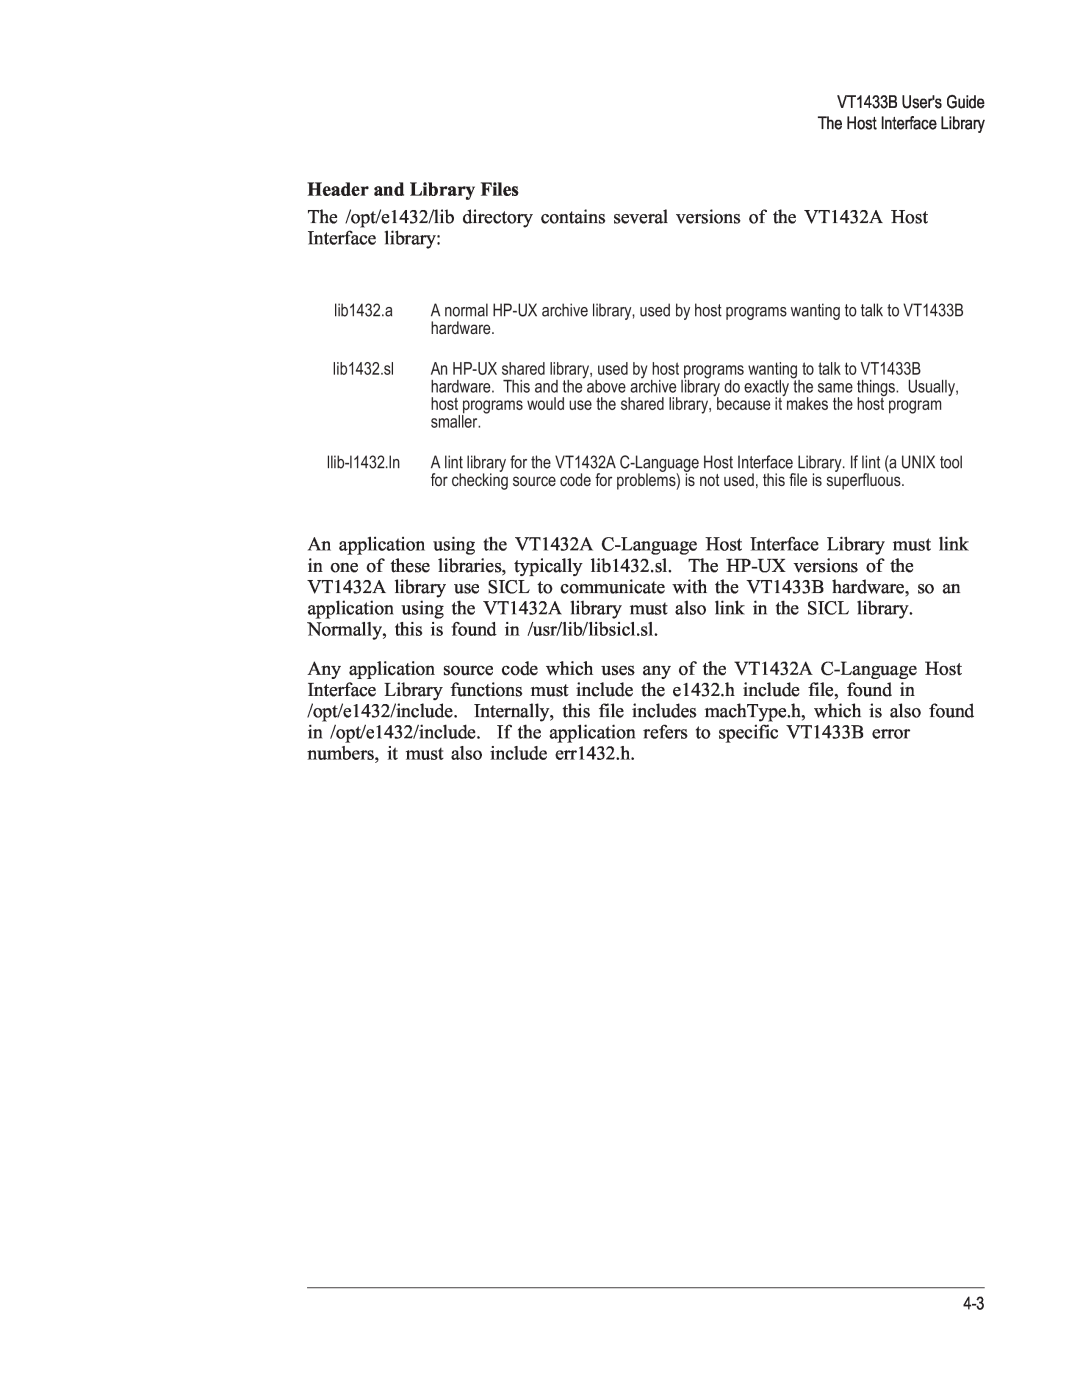 VXI VT1433B manual Header and Library Files 